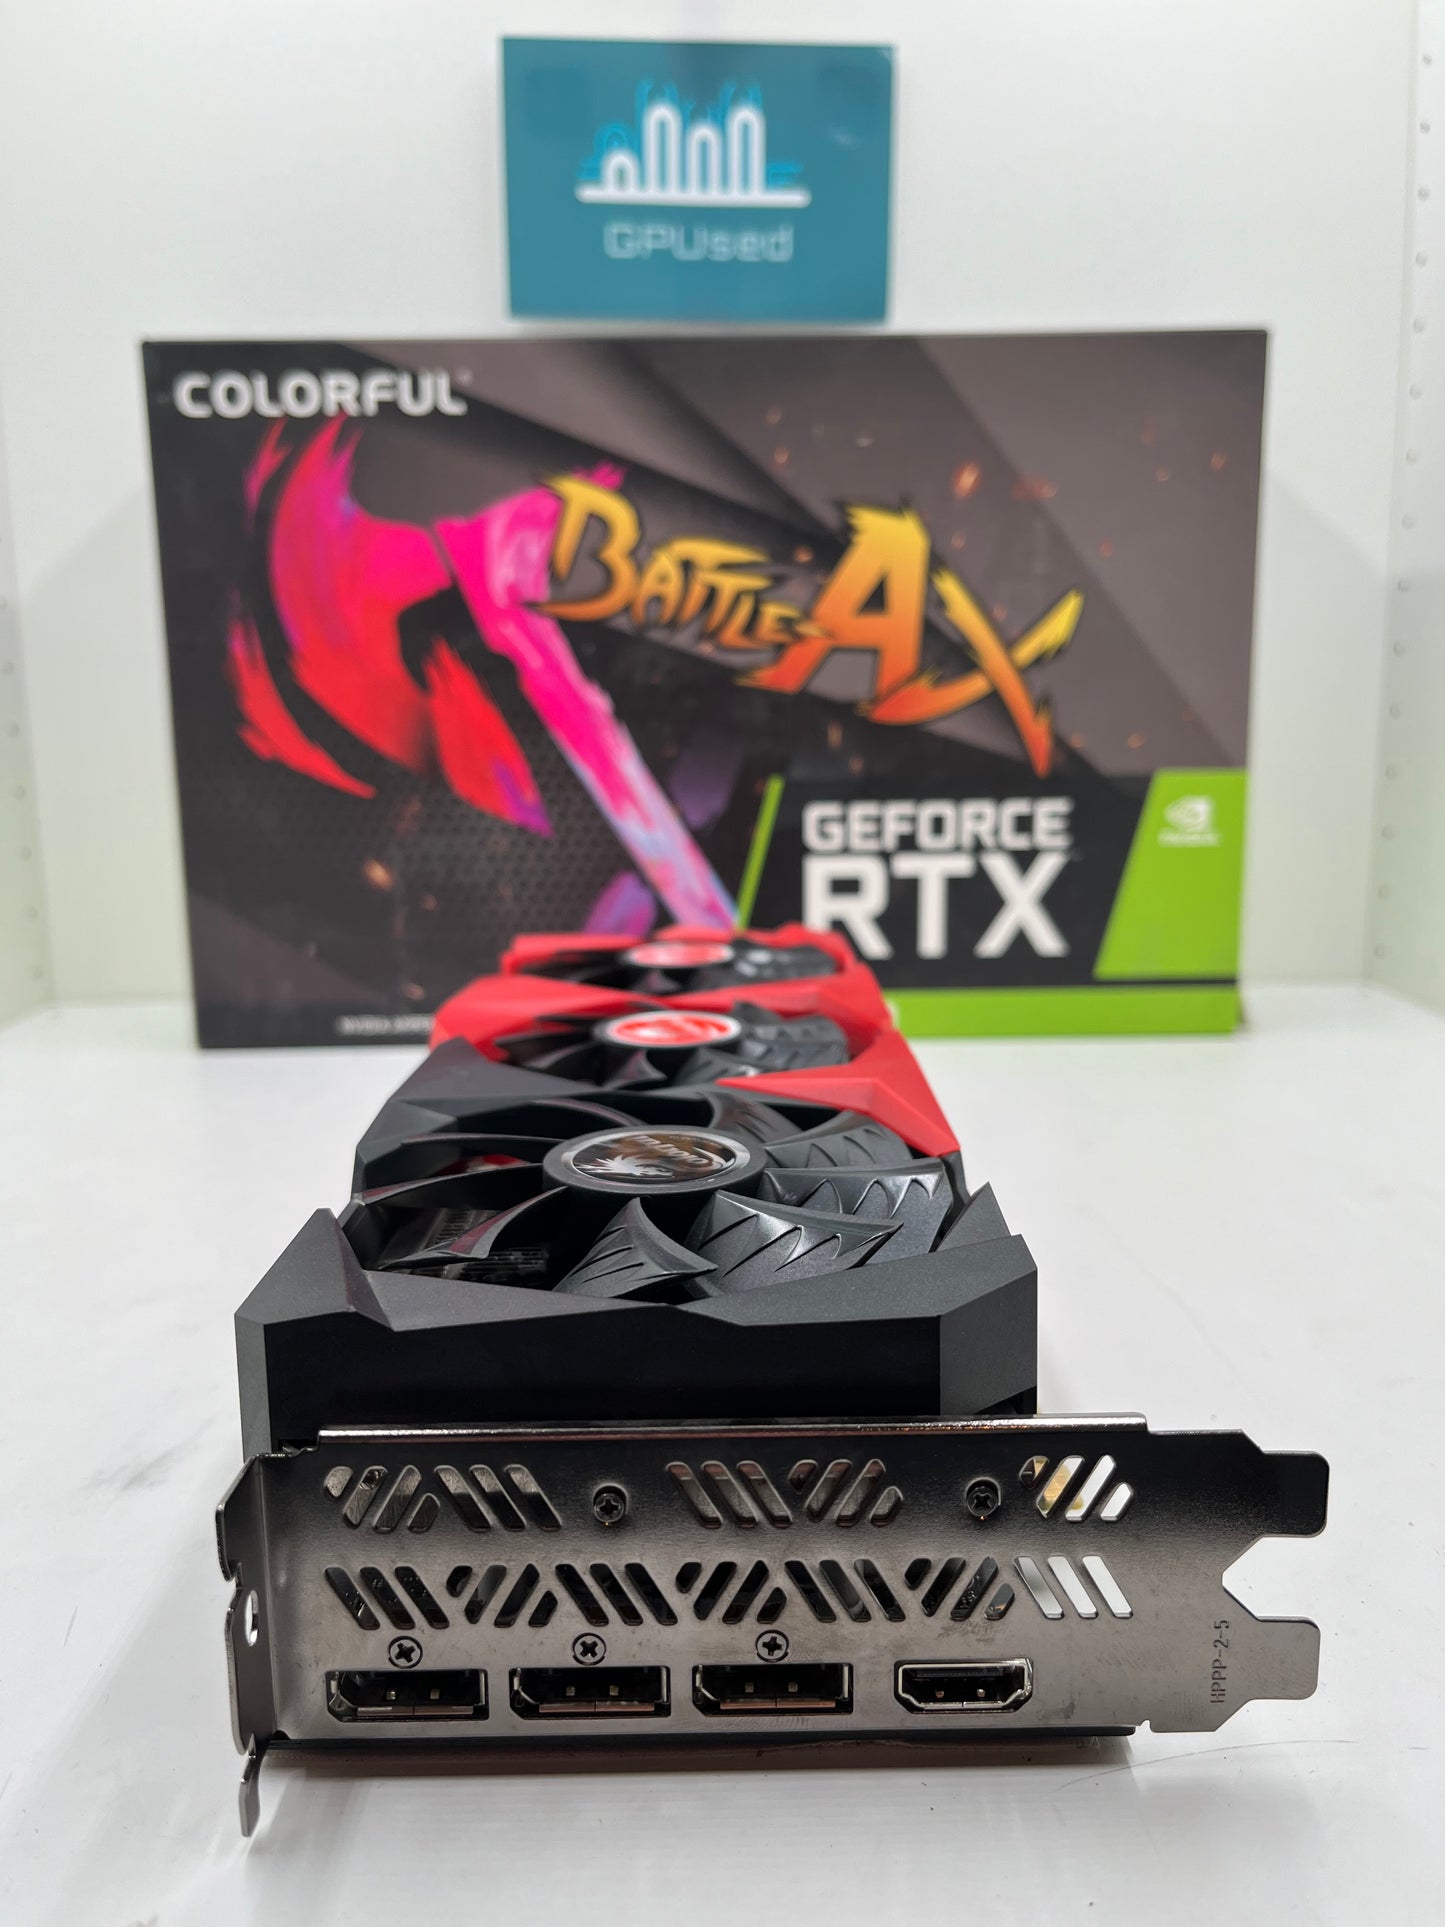 Colorful Nvidia GeForce RTX 3070 BattleAx GDDR6 - Was £309.99 - A